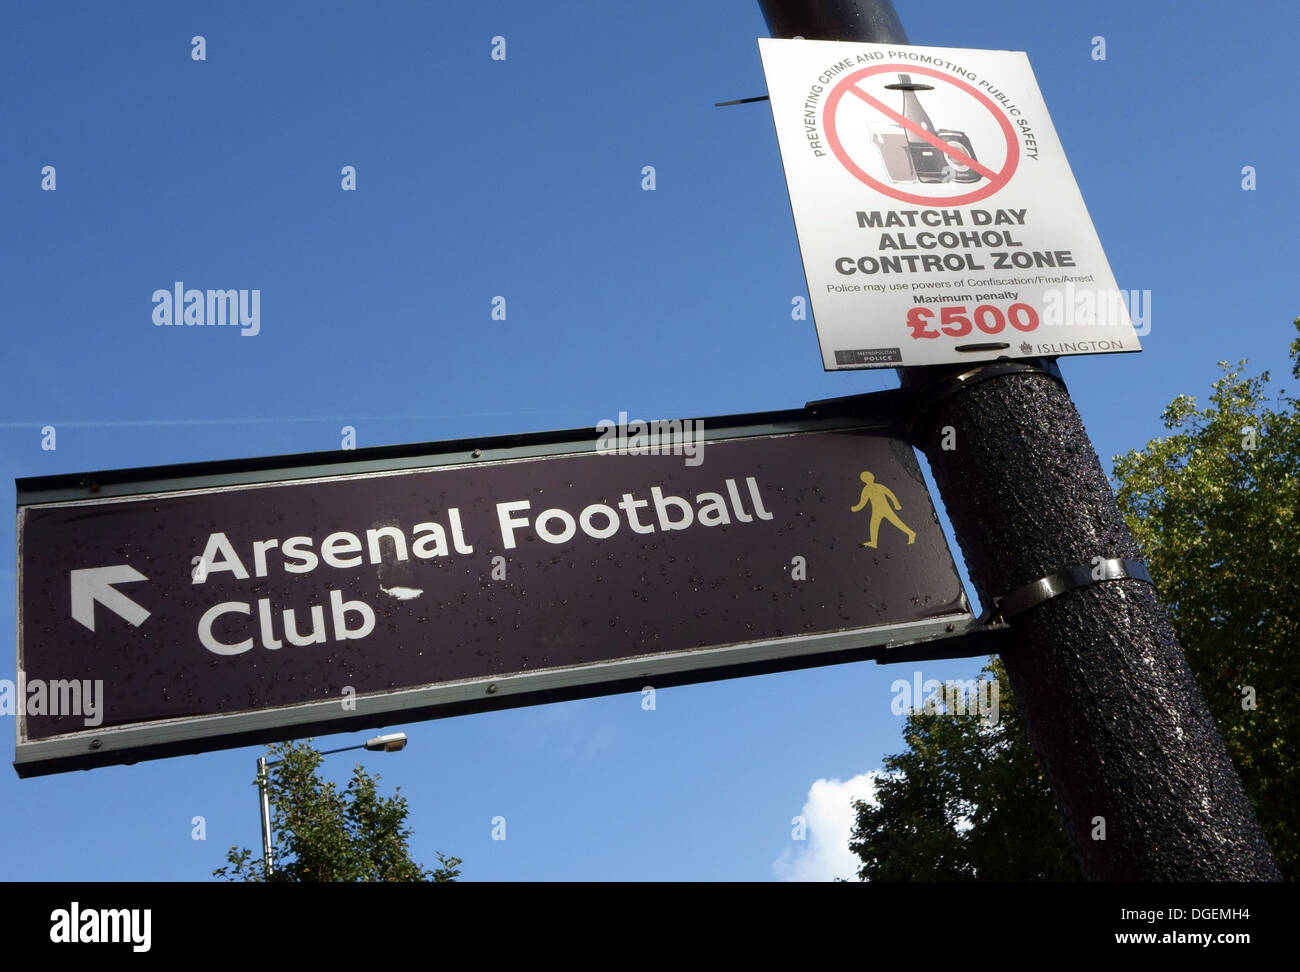 Alcohol match day control zone sign near Arsenal F.C. Emirates Stadium, London Stock Photo